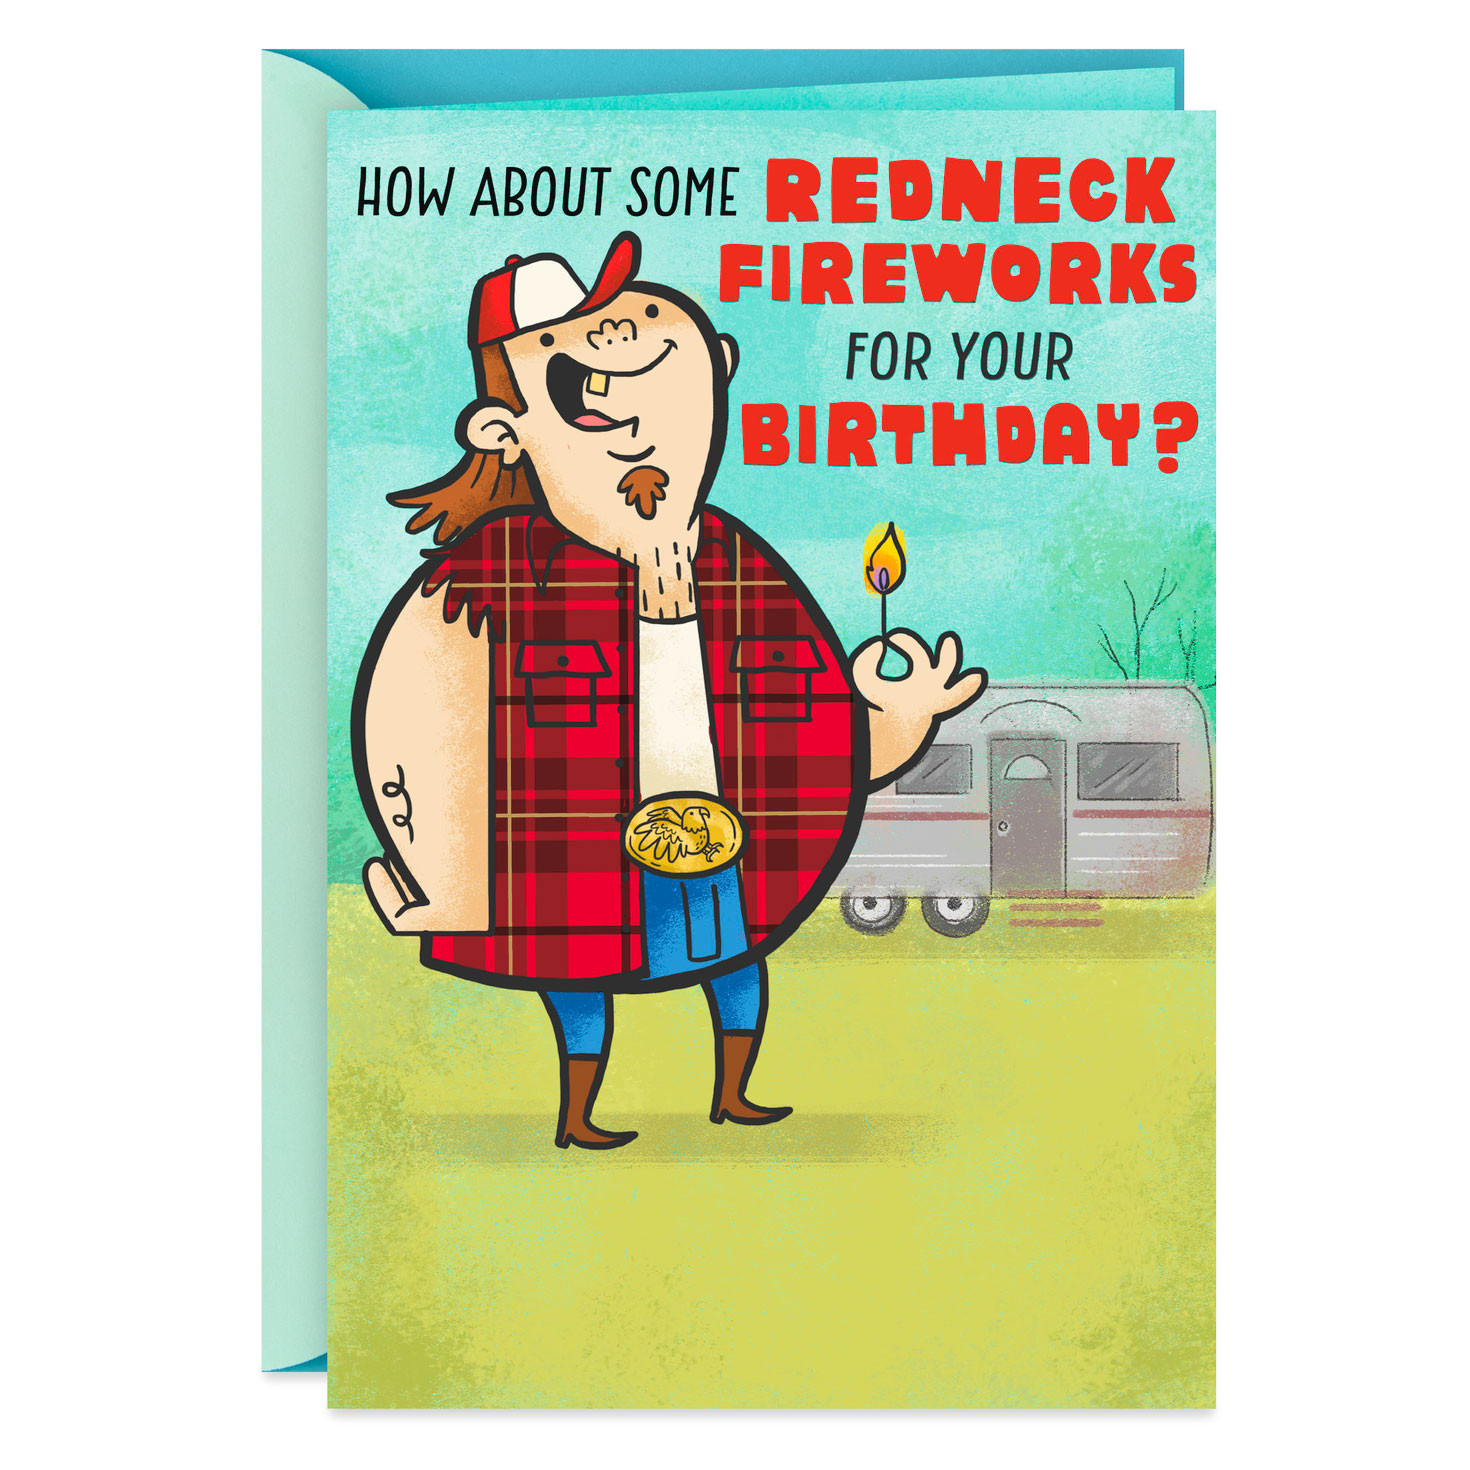 Redneck Birthday Wishes
 Redneck Fireworks Birthday Card With Sound Greeting